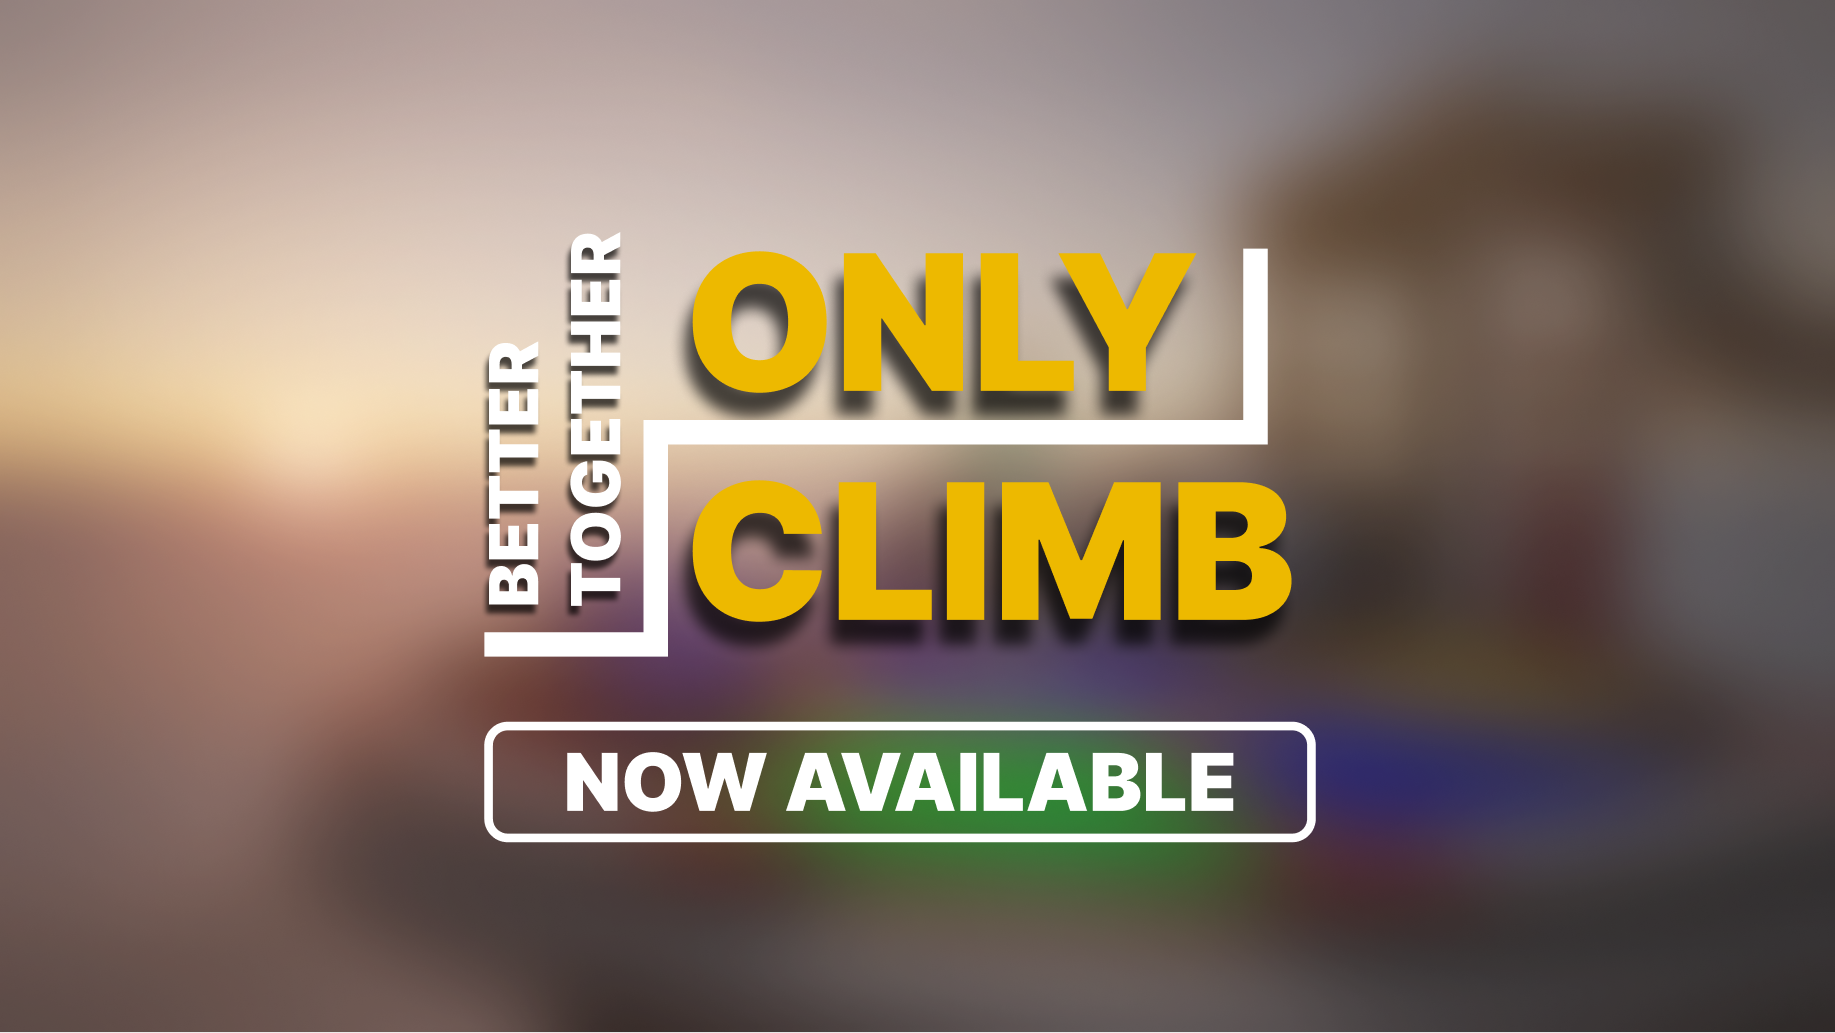 Only climb better. Only Climb: better together надпись. Only Climb.